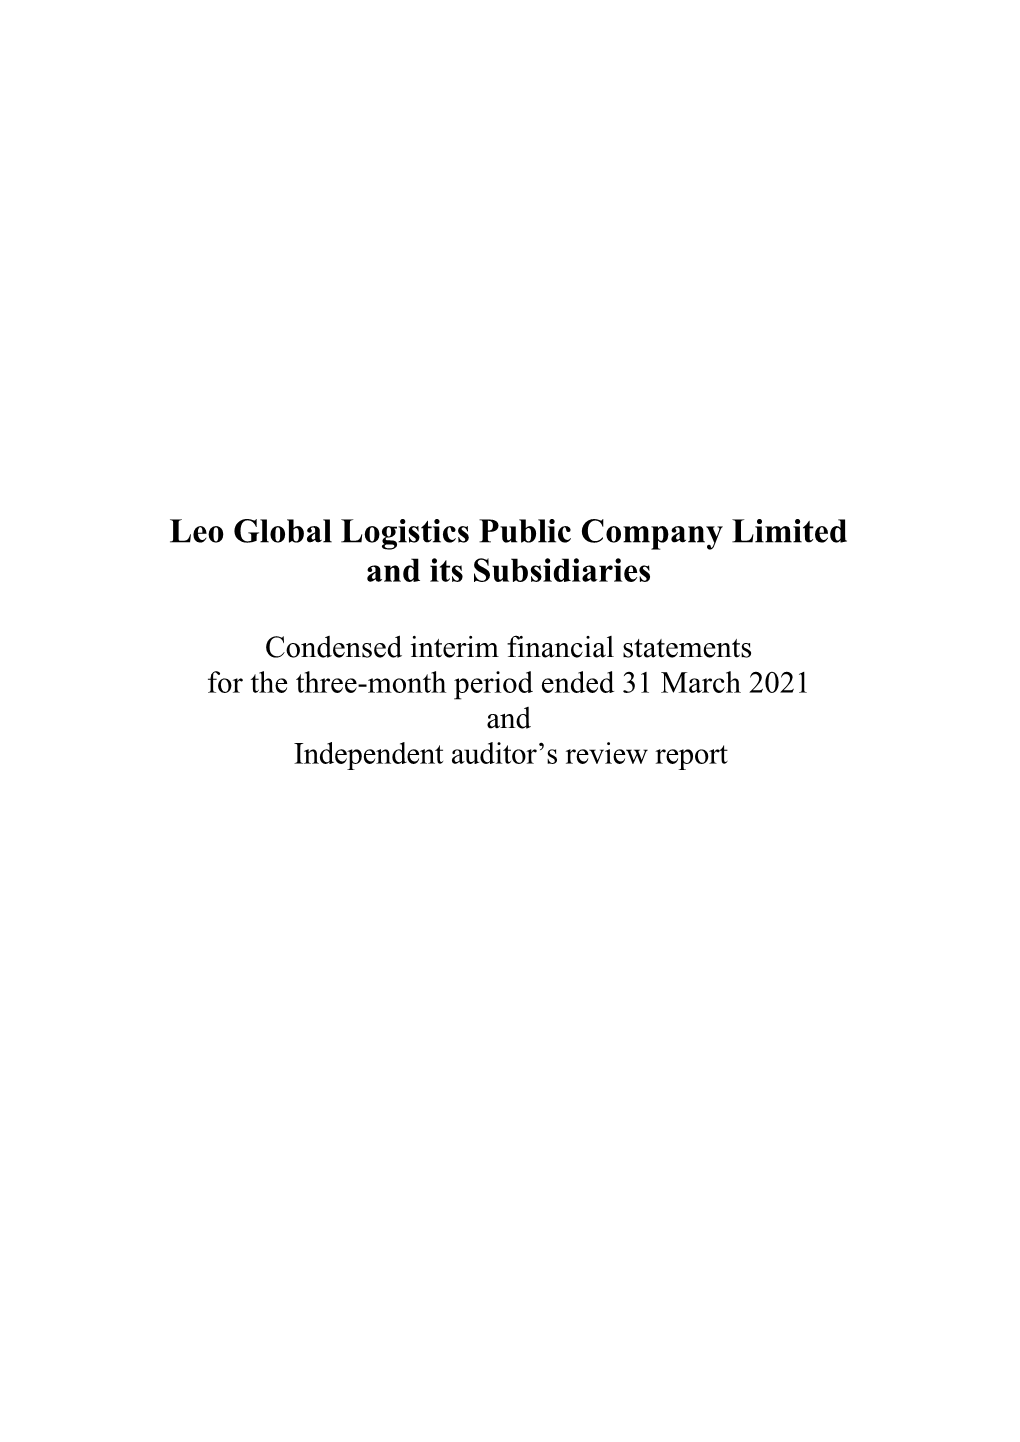 Leo Global Logistics Public Company Limited and Its Subsidiaries